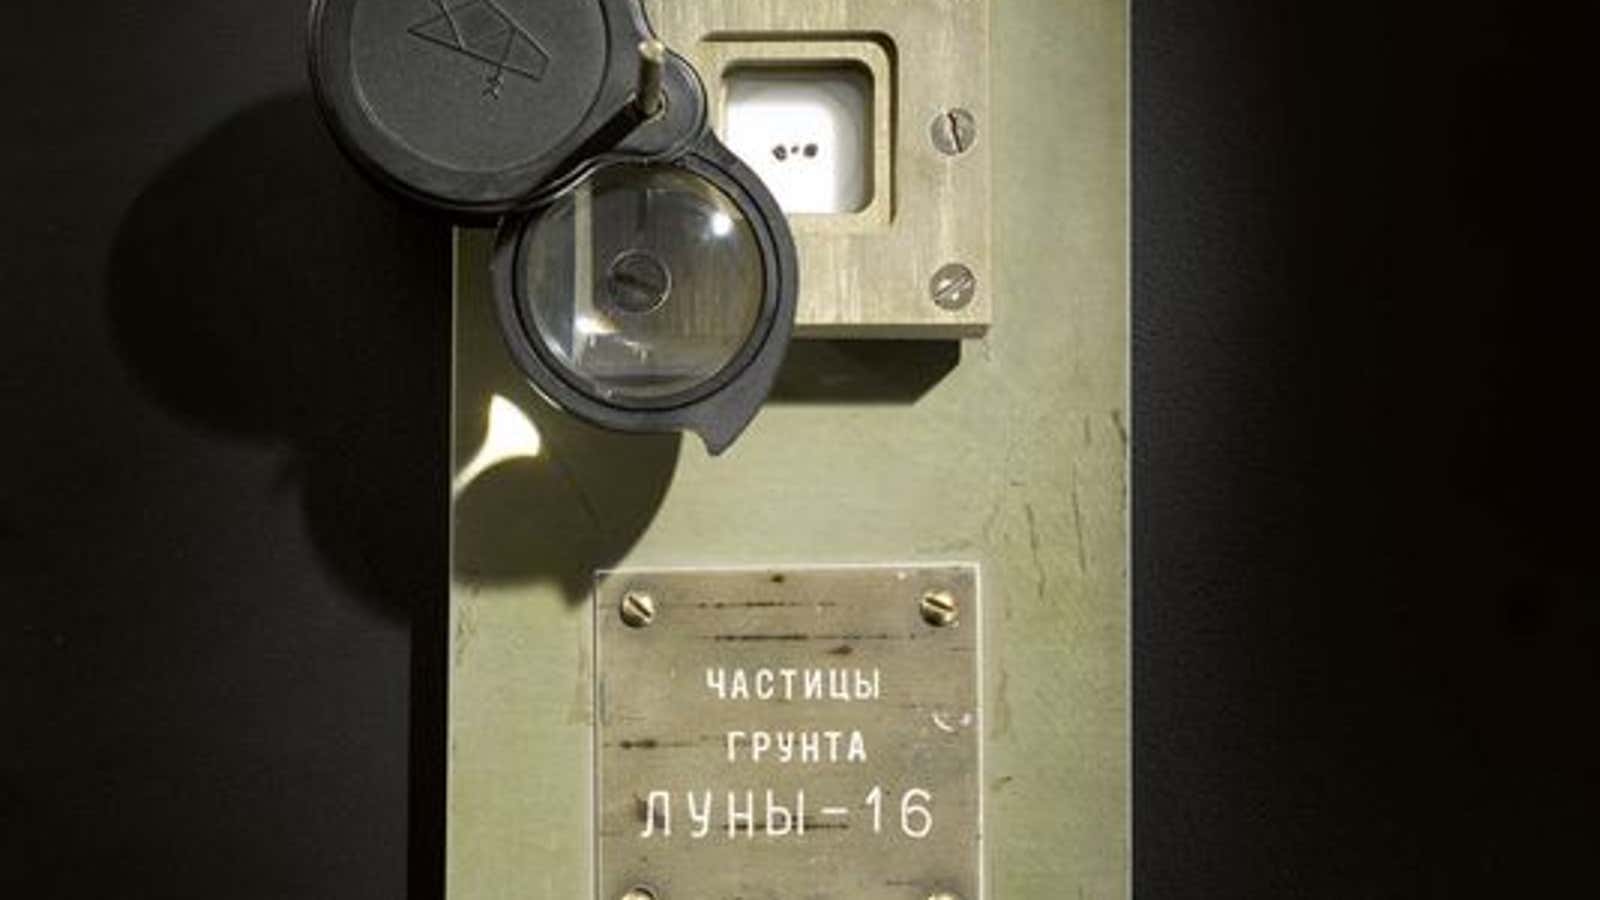 Soviet lunar samples held inside a special viewing case.